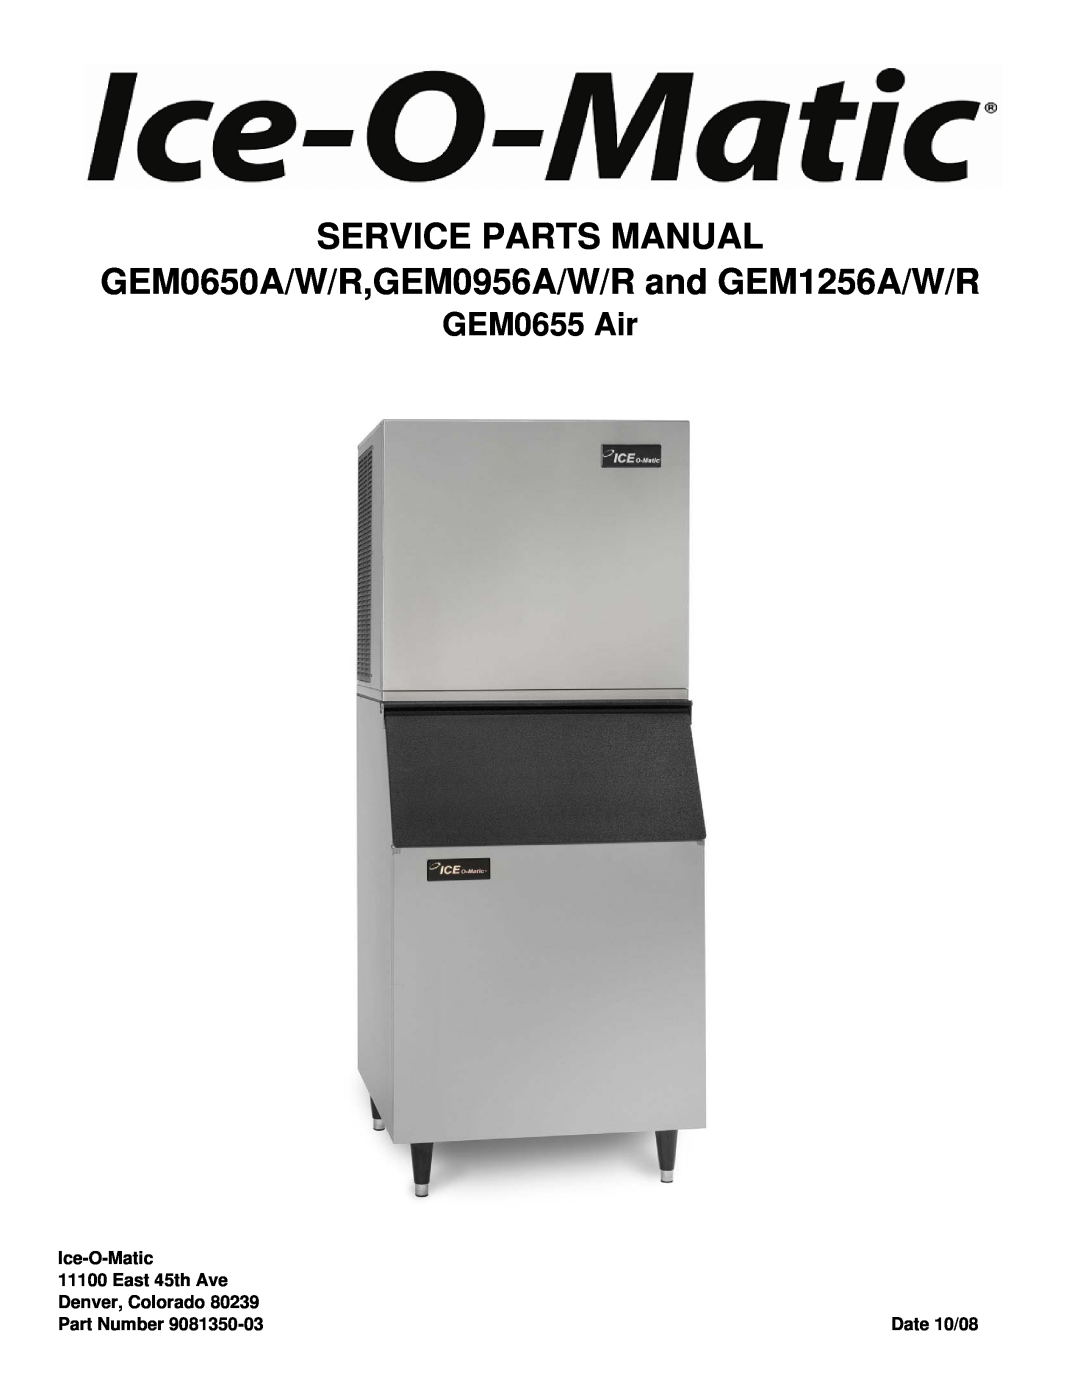 Ice-O-Matic manual SERVICE PARTS MANUAL GEM0650A/W/R,GEM0956A/W/R and GEM1256A/W/R, GEM0655 Air 